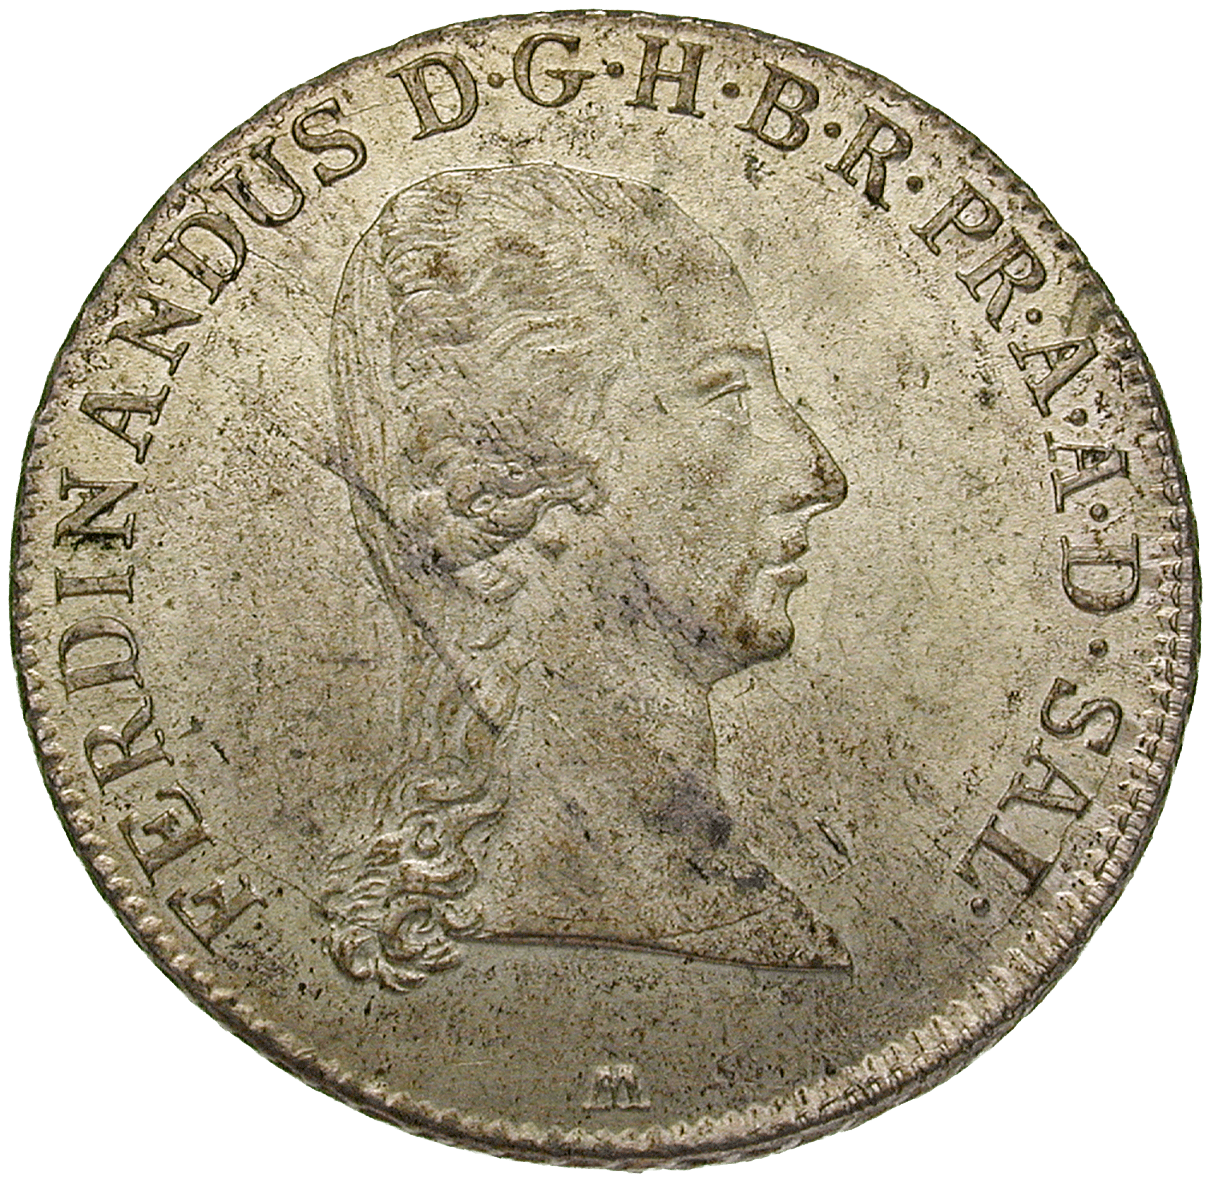 Holy Roman Empire, Archduchy of Austria, Ferdinand Charles of Ausria-Este, 20 Kreuzer 1804 (obverse)